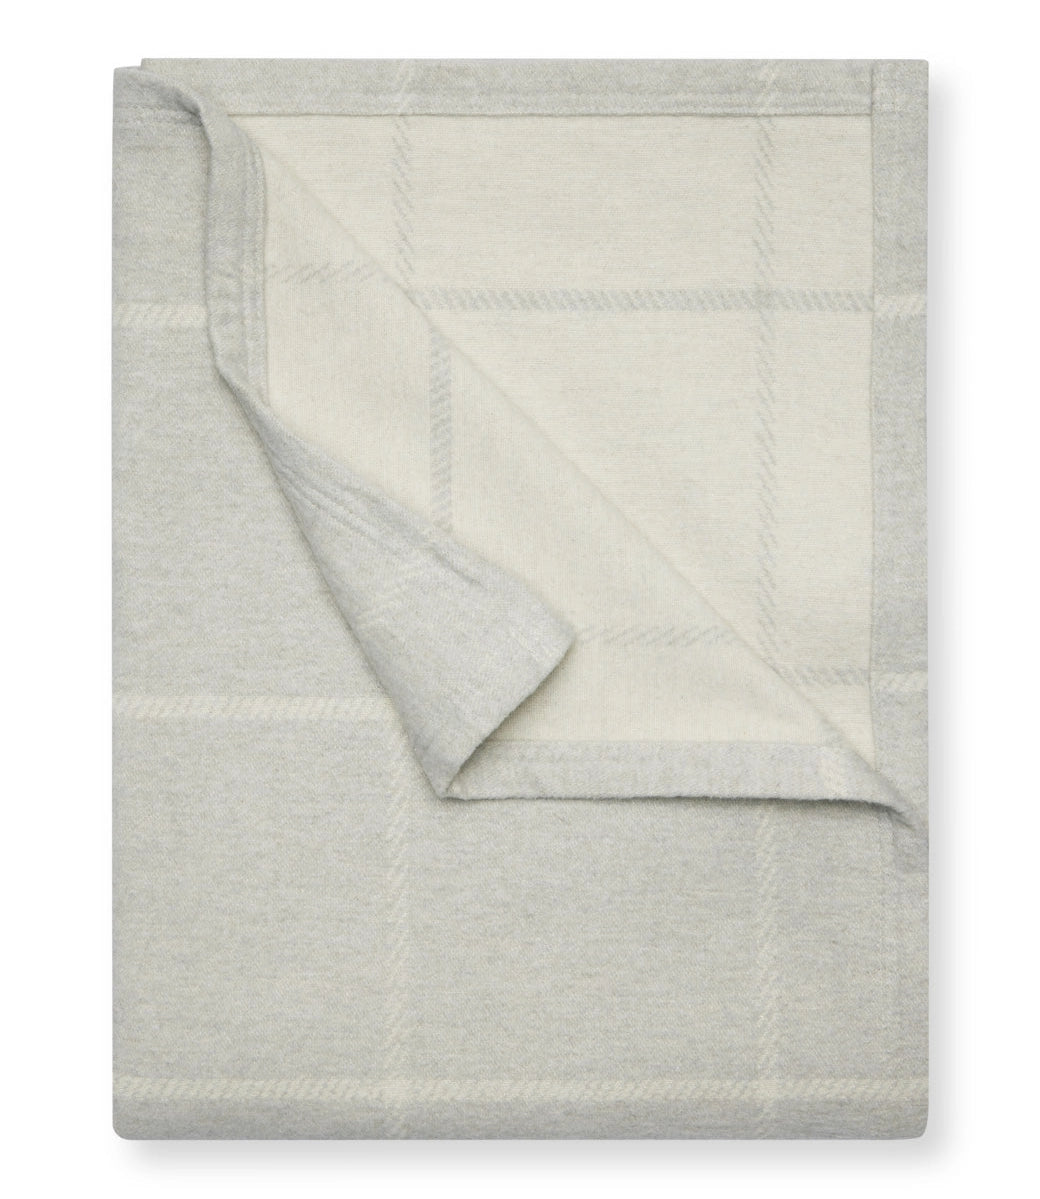 ChappyWrap Lightweight Blanket- Windowpane Light Grey